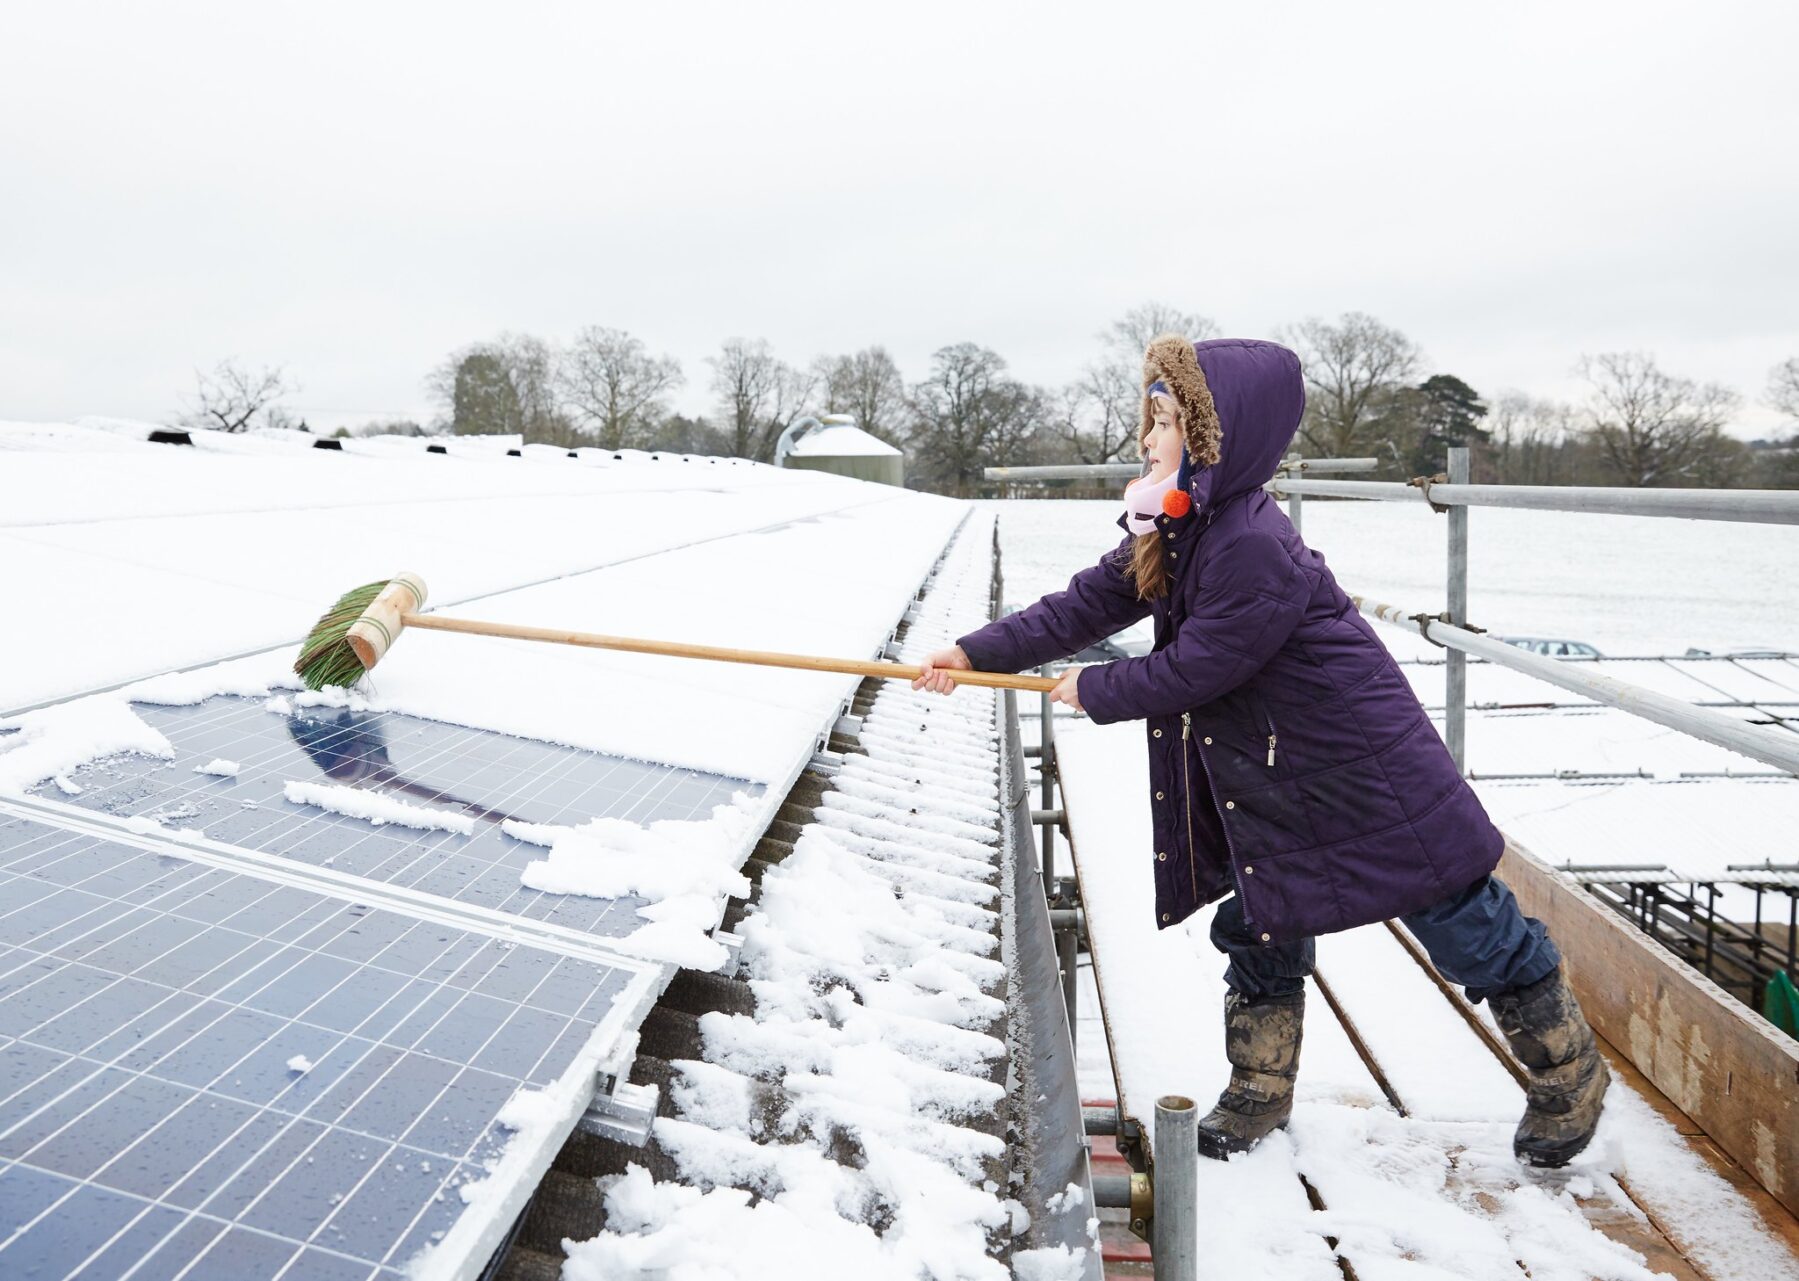 A girl brushes a solar panel at Grange Farm, Balcombe, United Kingdom (Photo by 1010UK (CC))